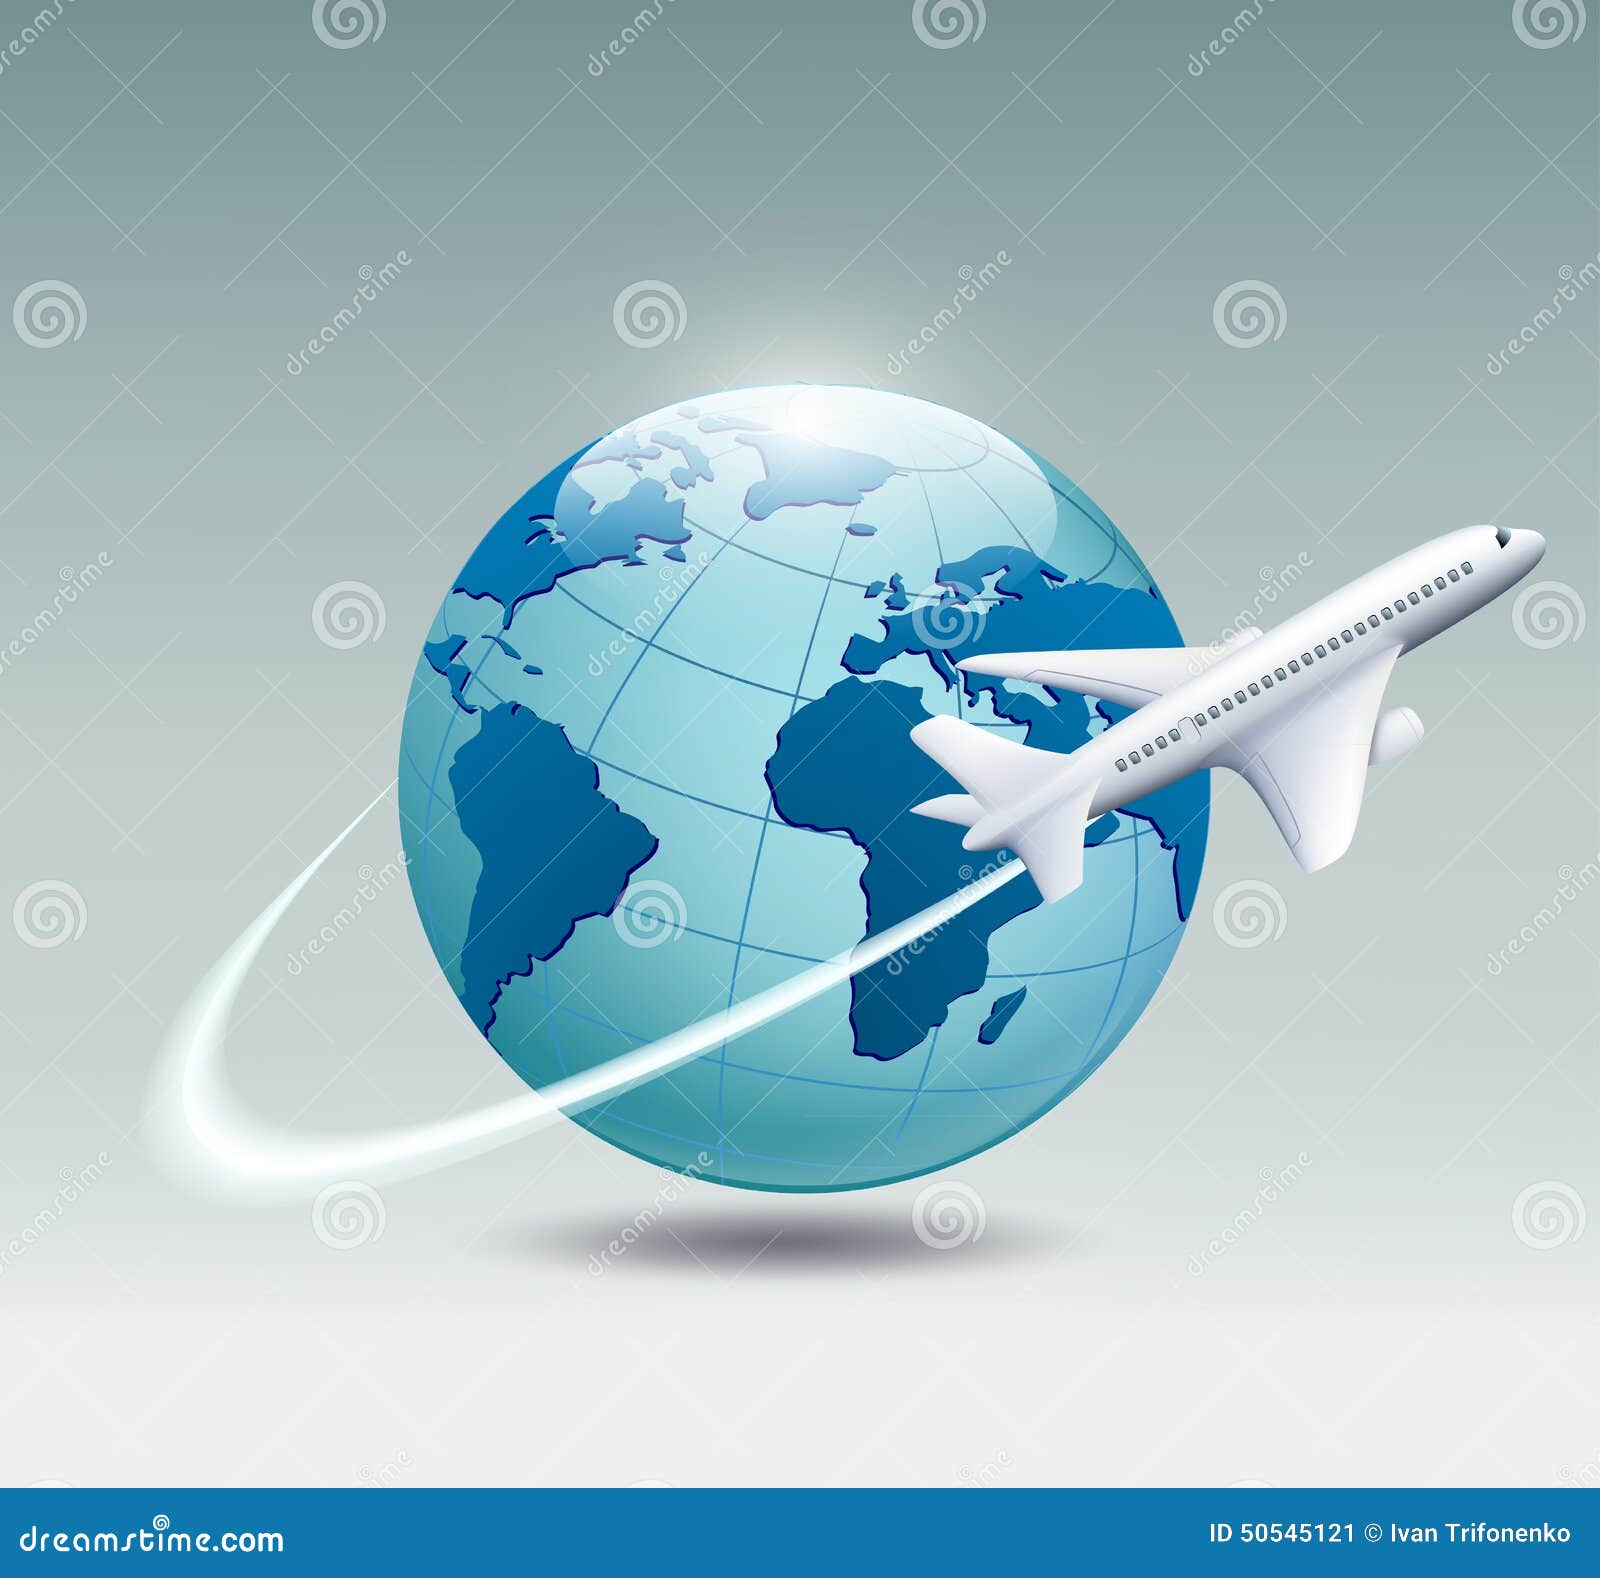 airplane circling the globe